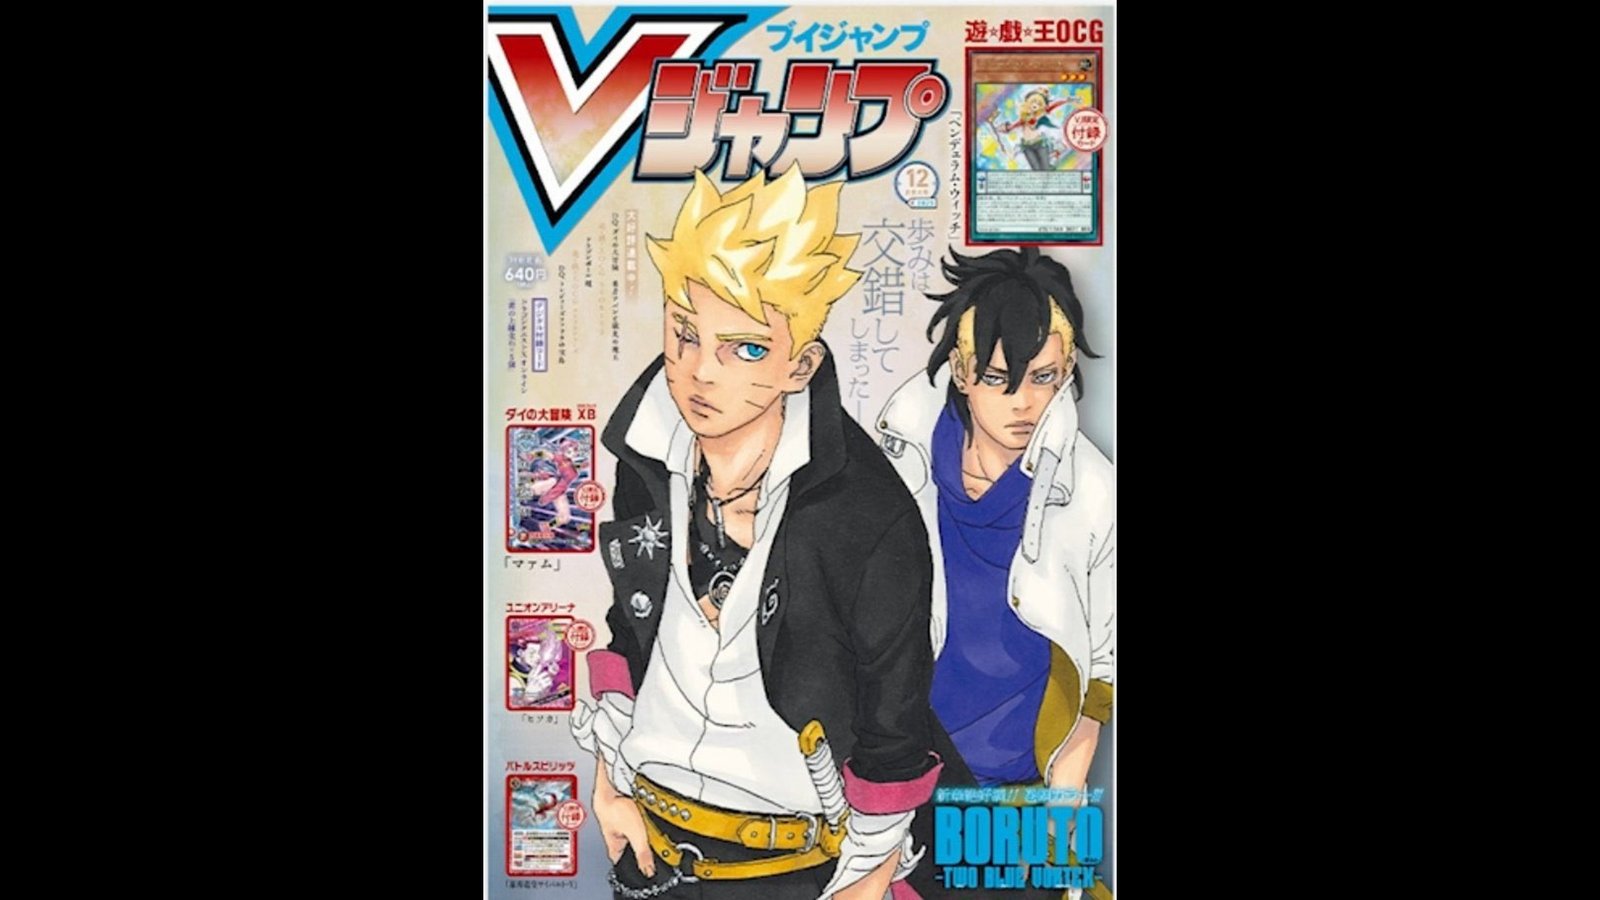 Boruto manga cover featuring Kawaki